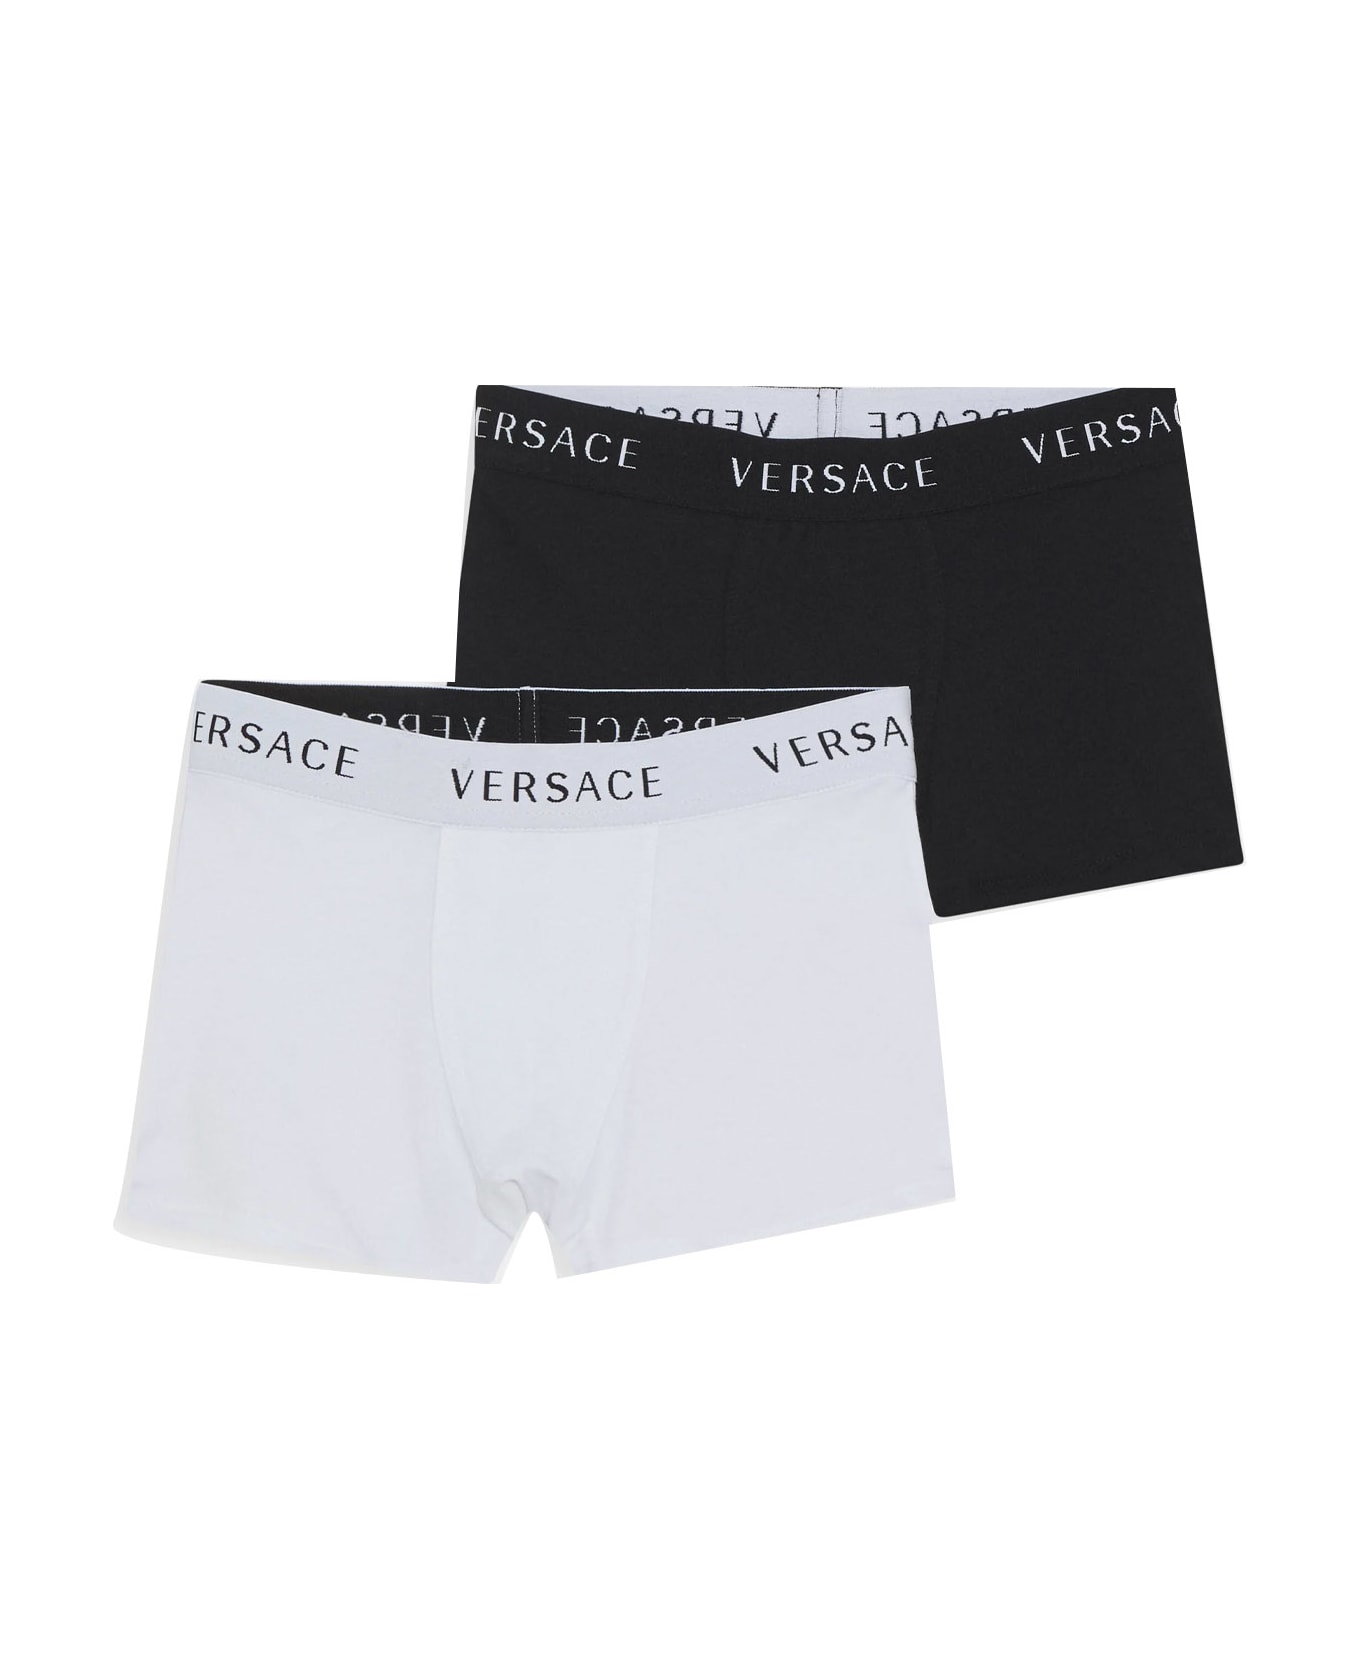 Versace Pack Of 2 Cotton Boxer Briefs - Multicolor